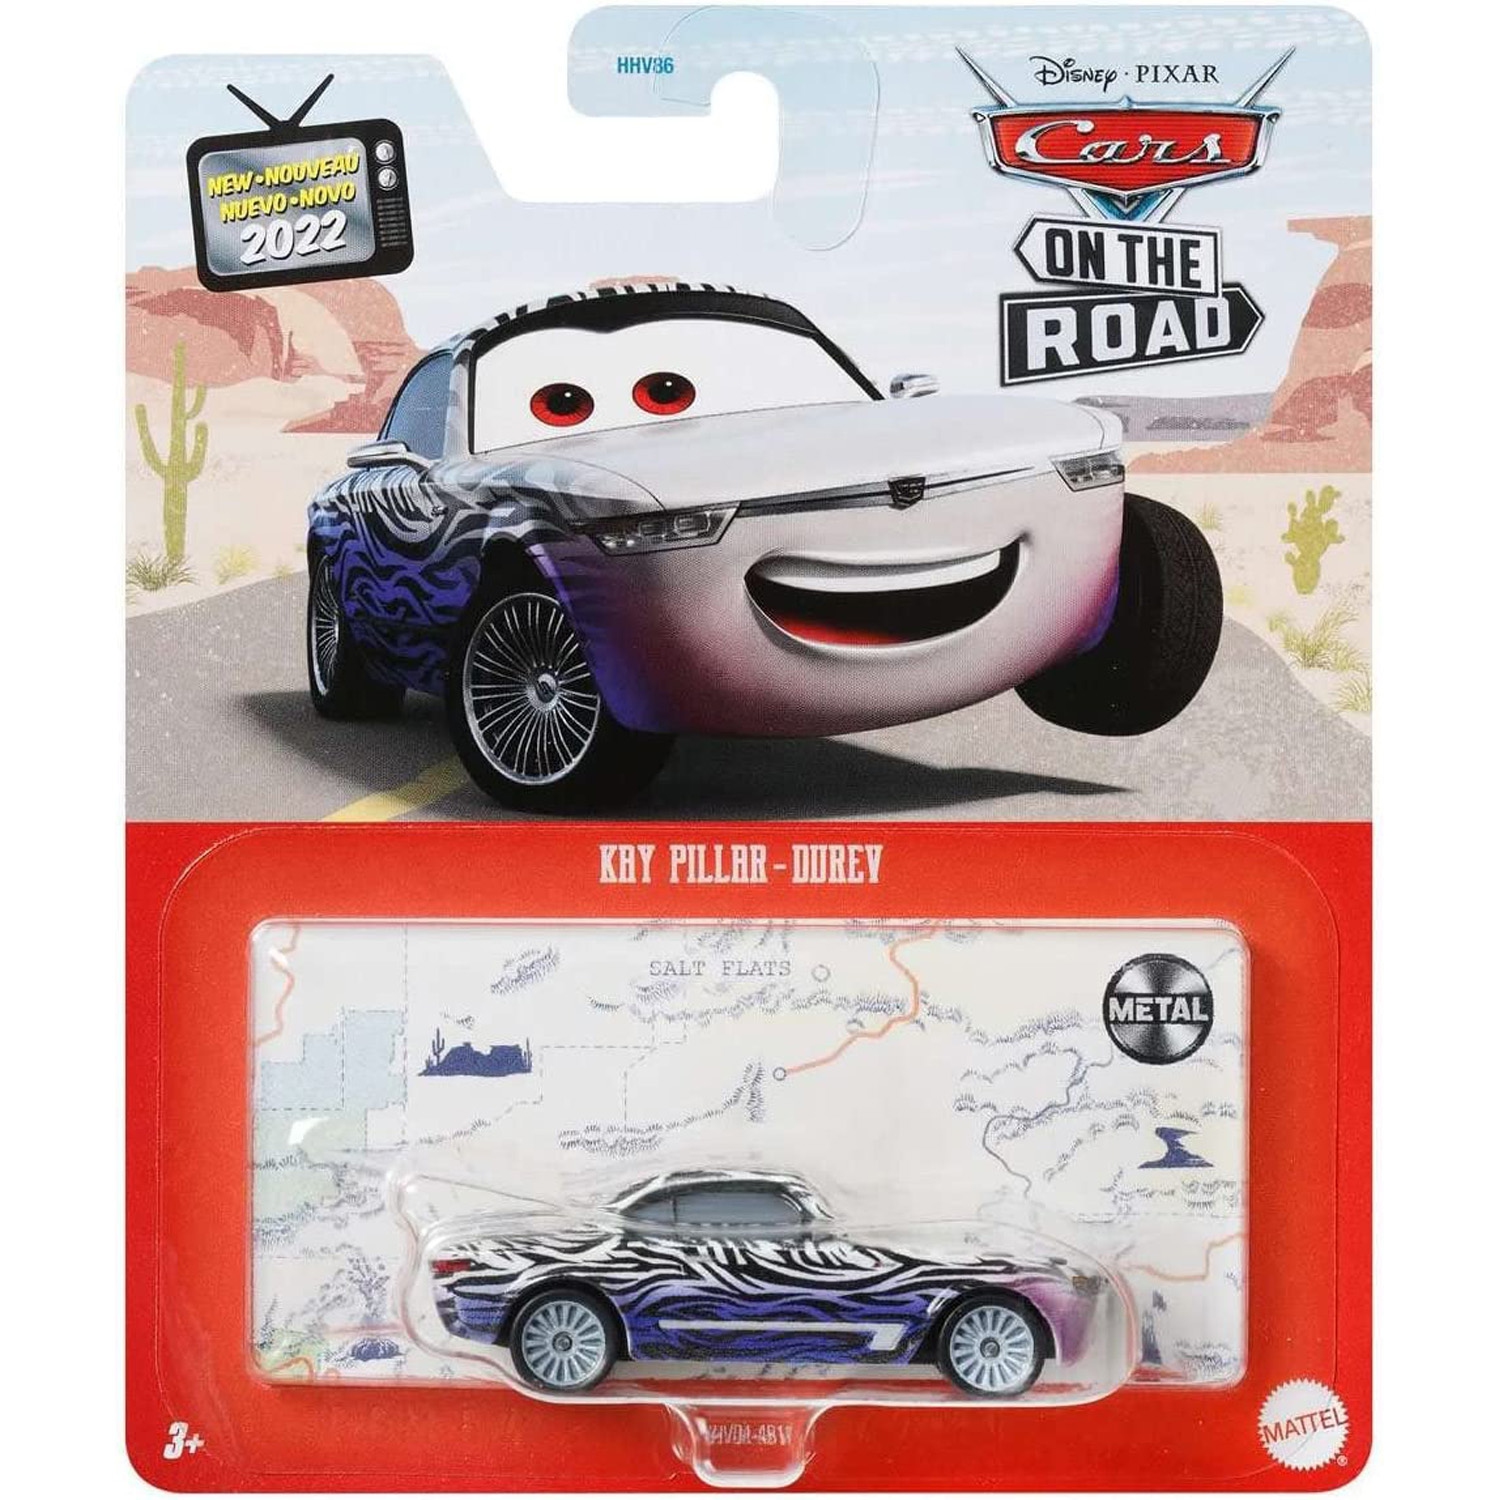 Disney Pixar Cars On The Road Kay Pillar-Durev HHV04 1:55 Scale Die-cast Vehicle